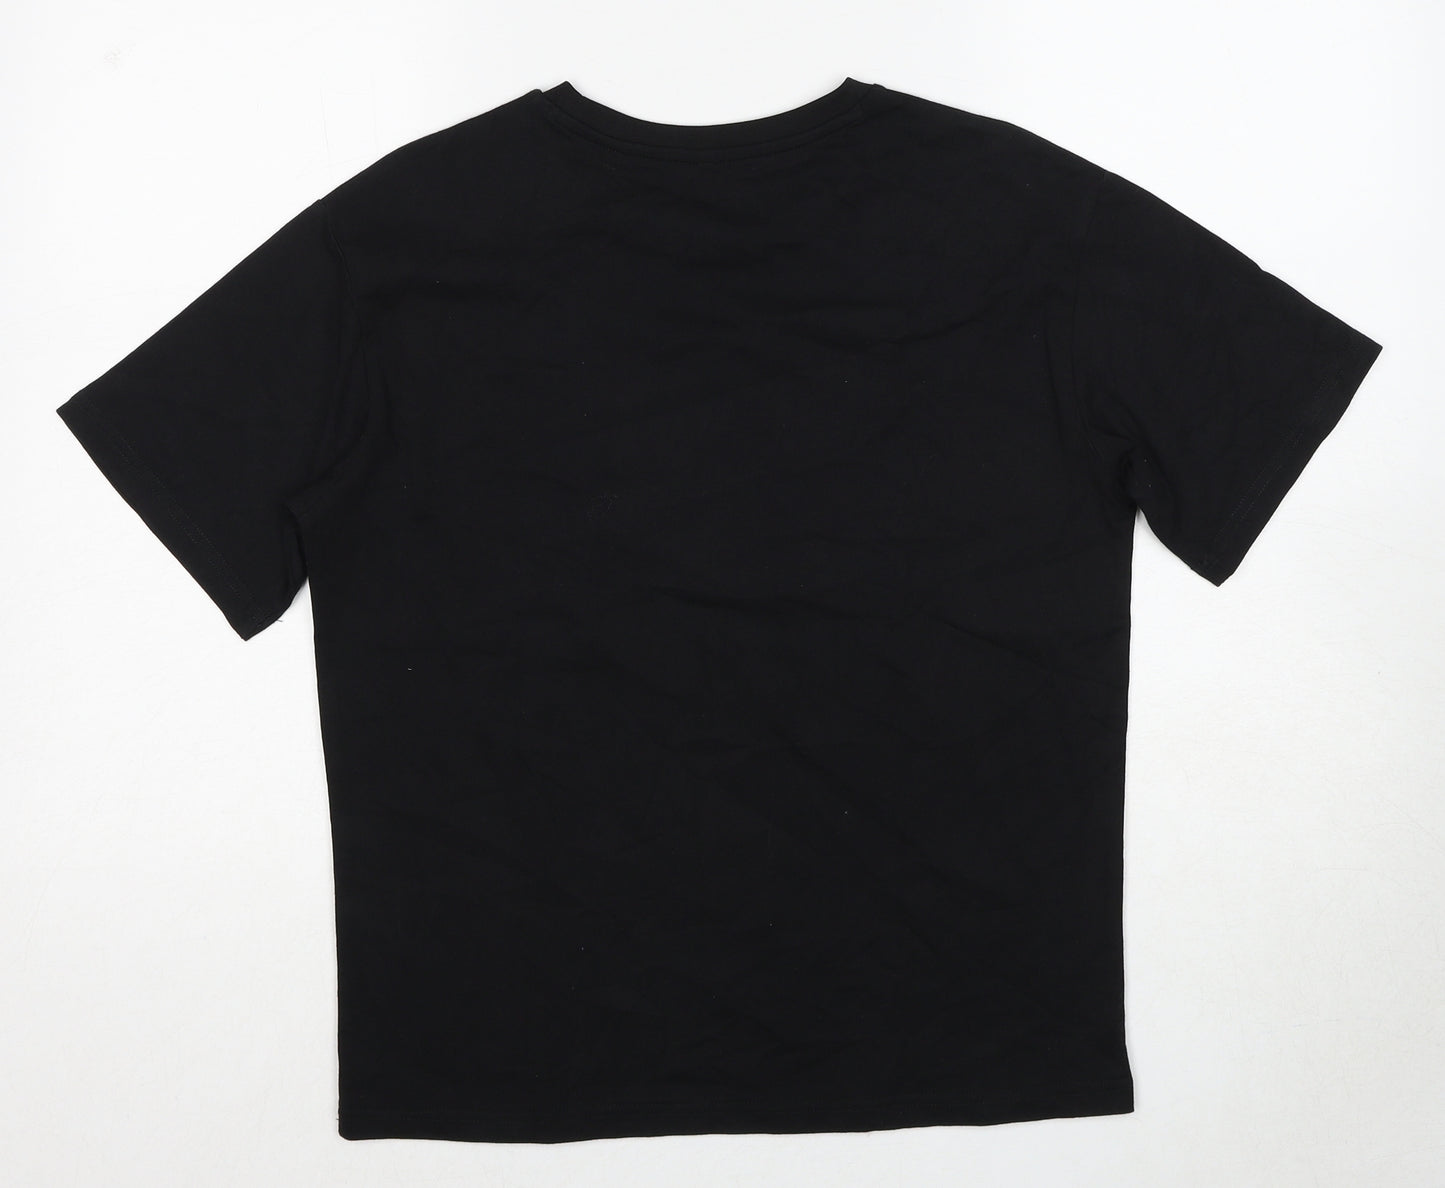 Enjoy Life Womens Black Polyester Basic T-Shirt Size S Crew Neck - Mona Lisa